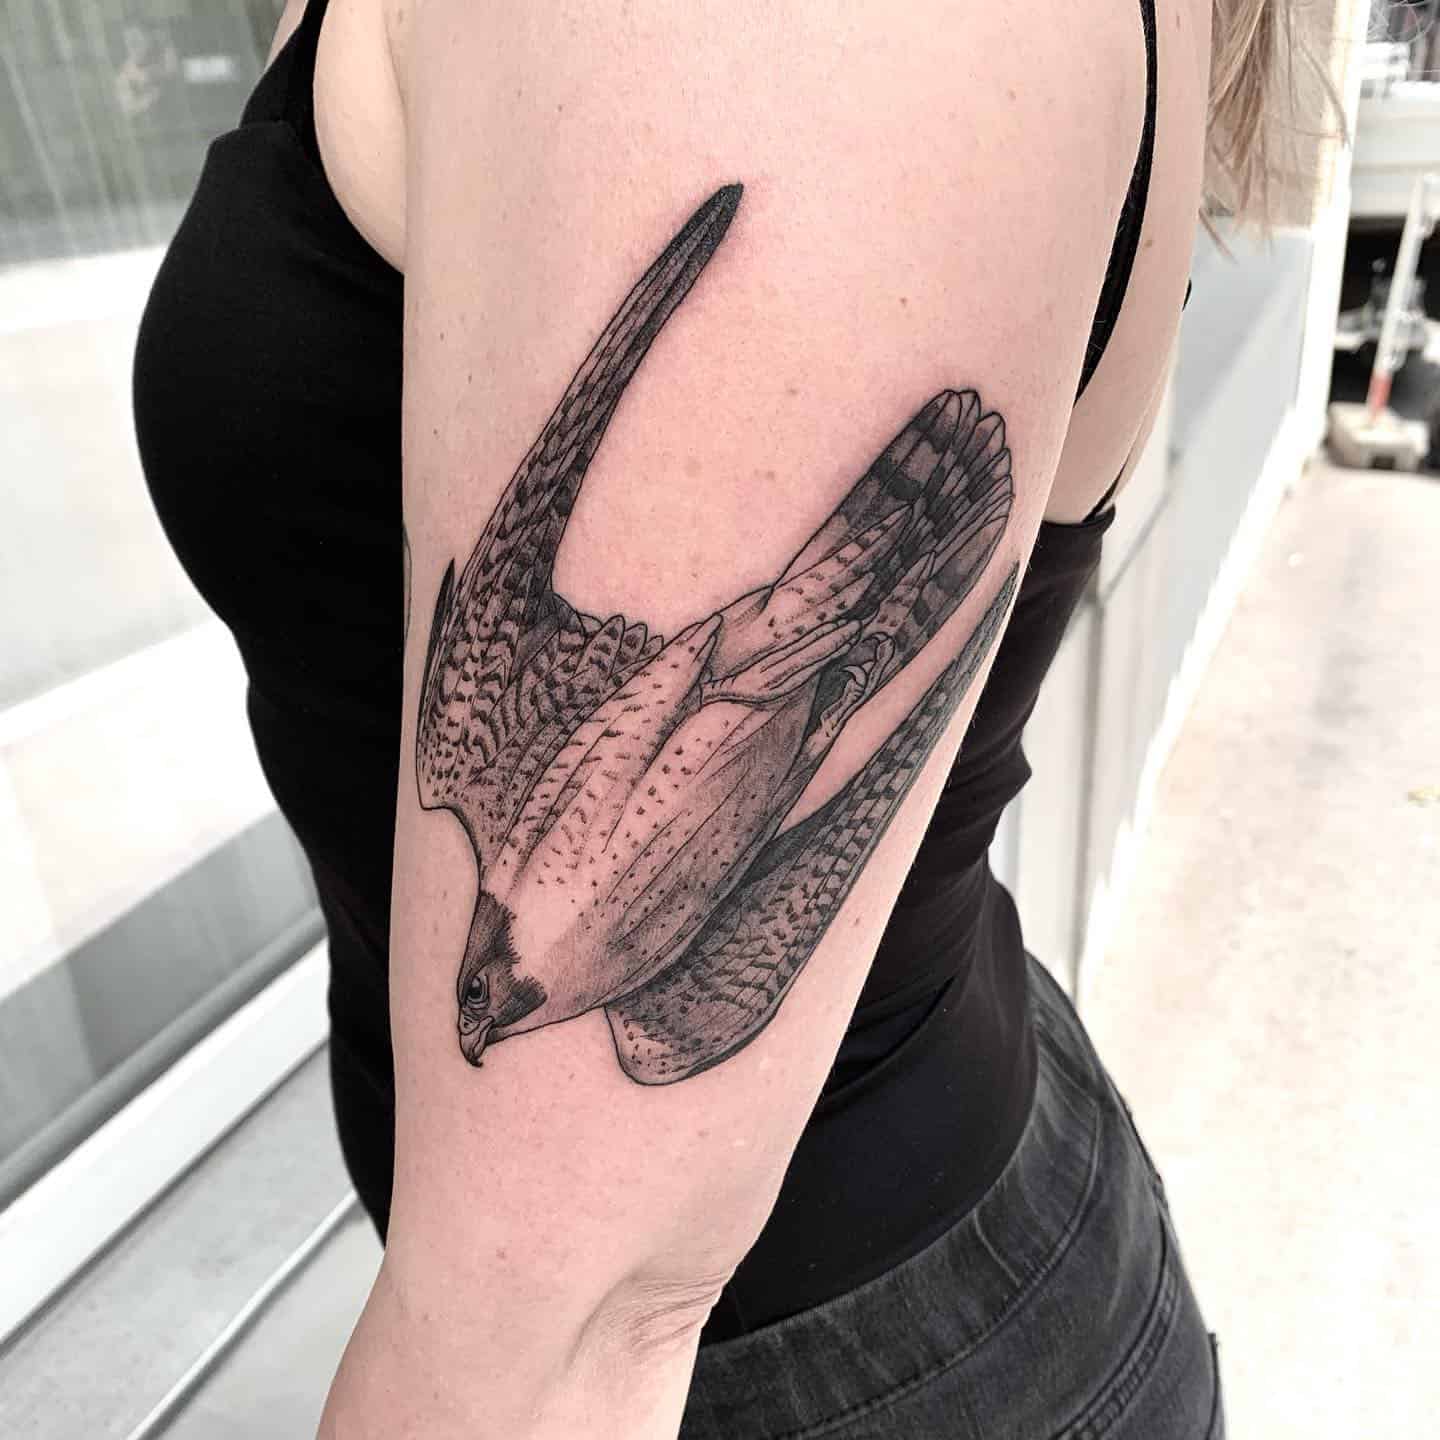 Tatuaje simbólico de un pájaro en el brazo